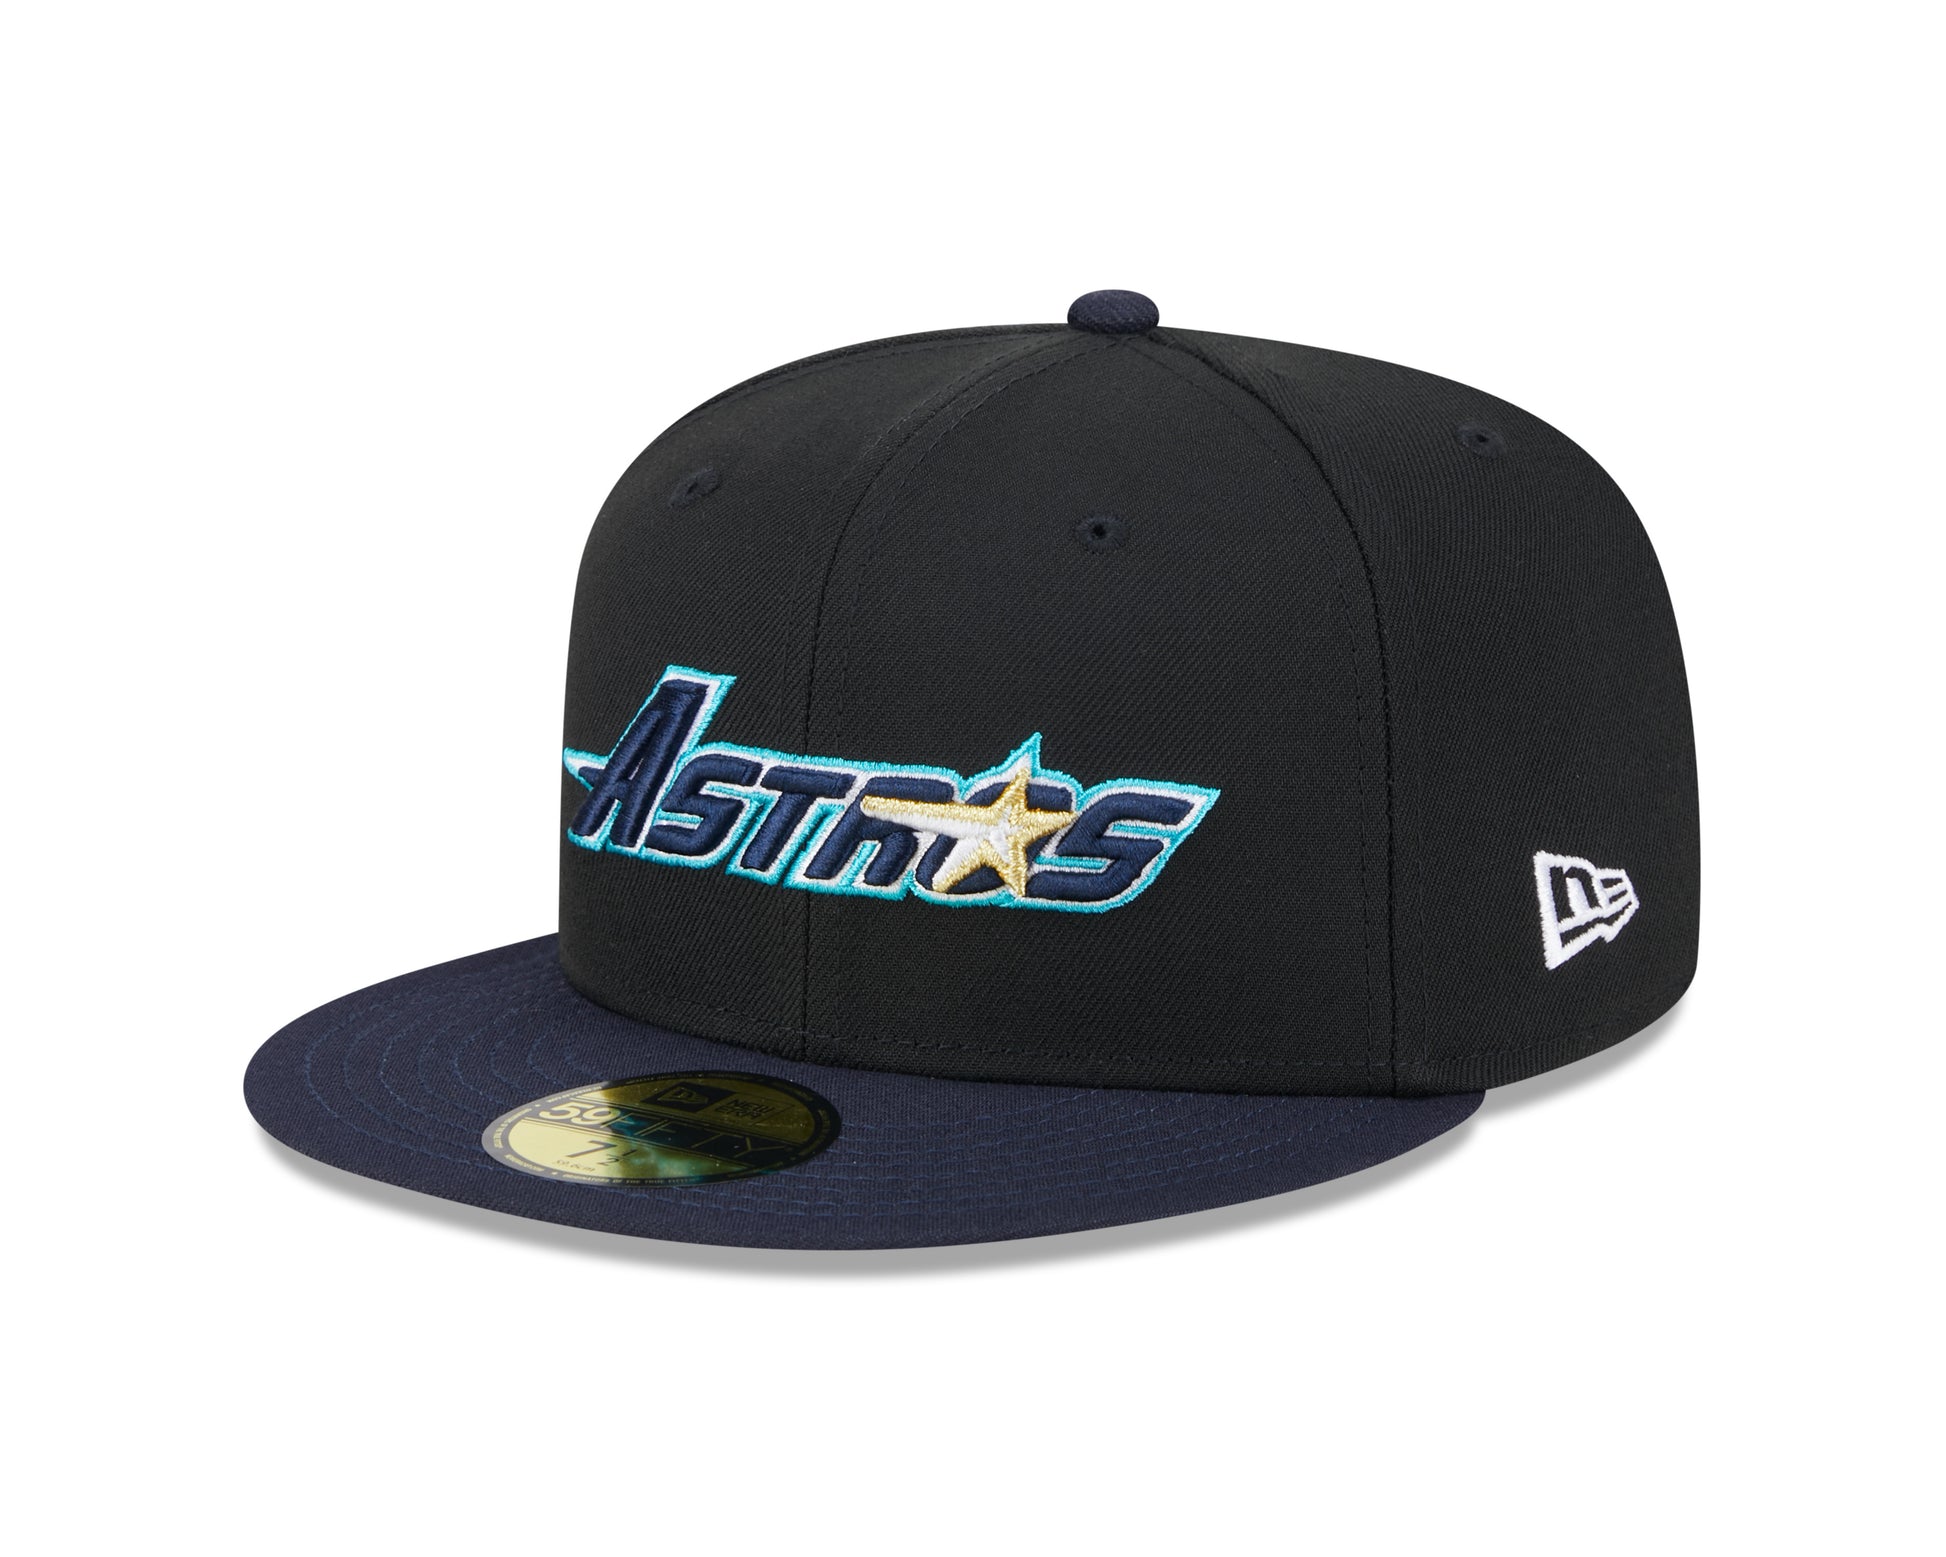 New Era - 59fifty Fitted Cap - Houston Astros - RETRO SPRING TRAINING - Black - Headz Up 